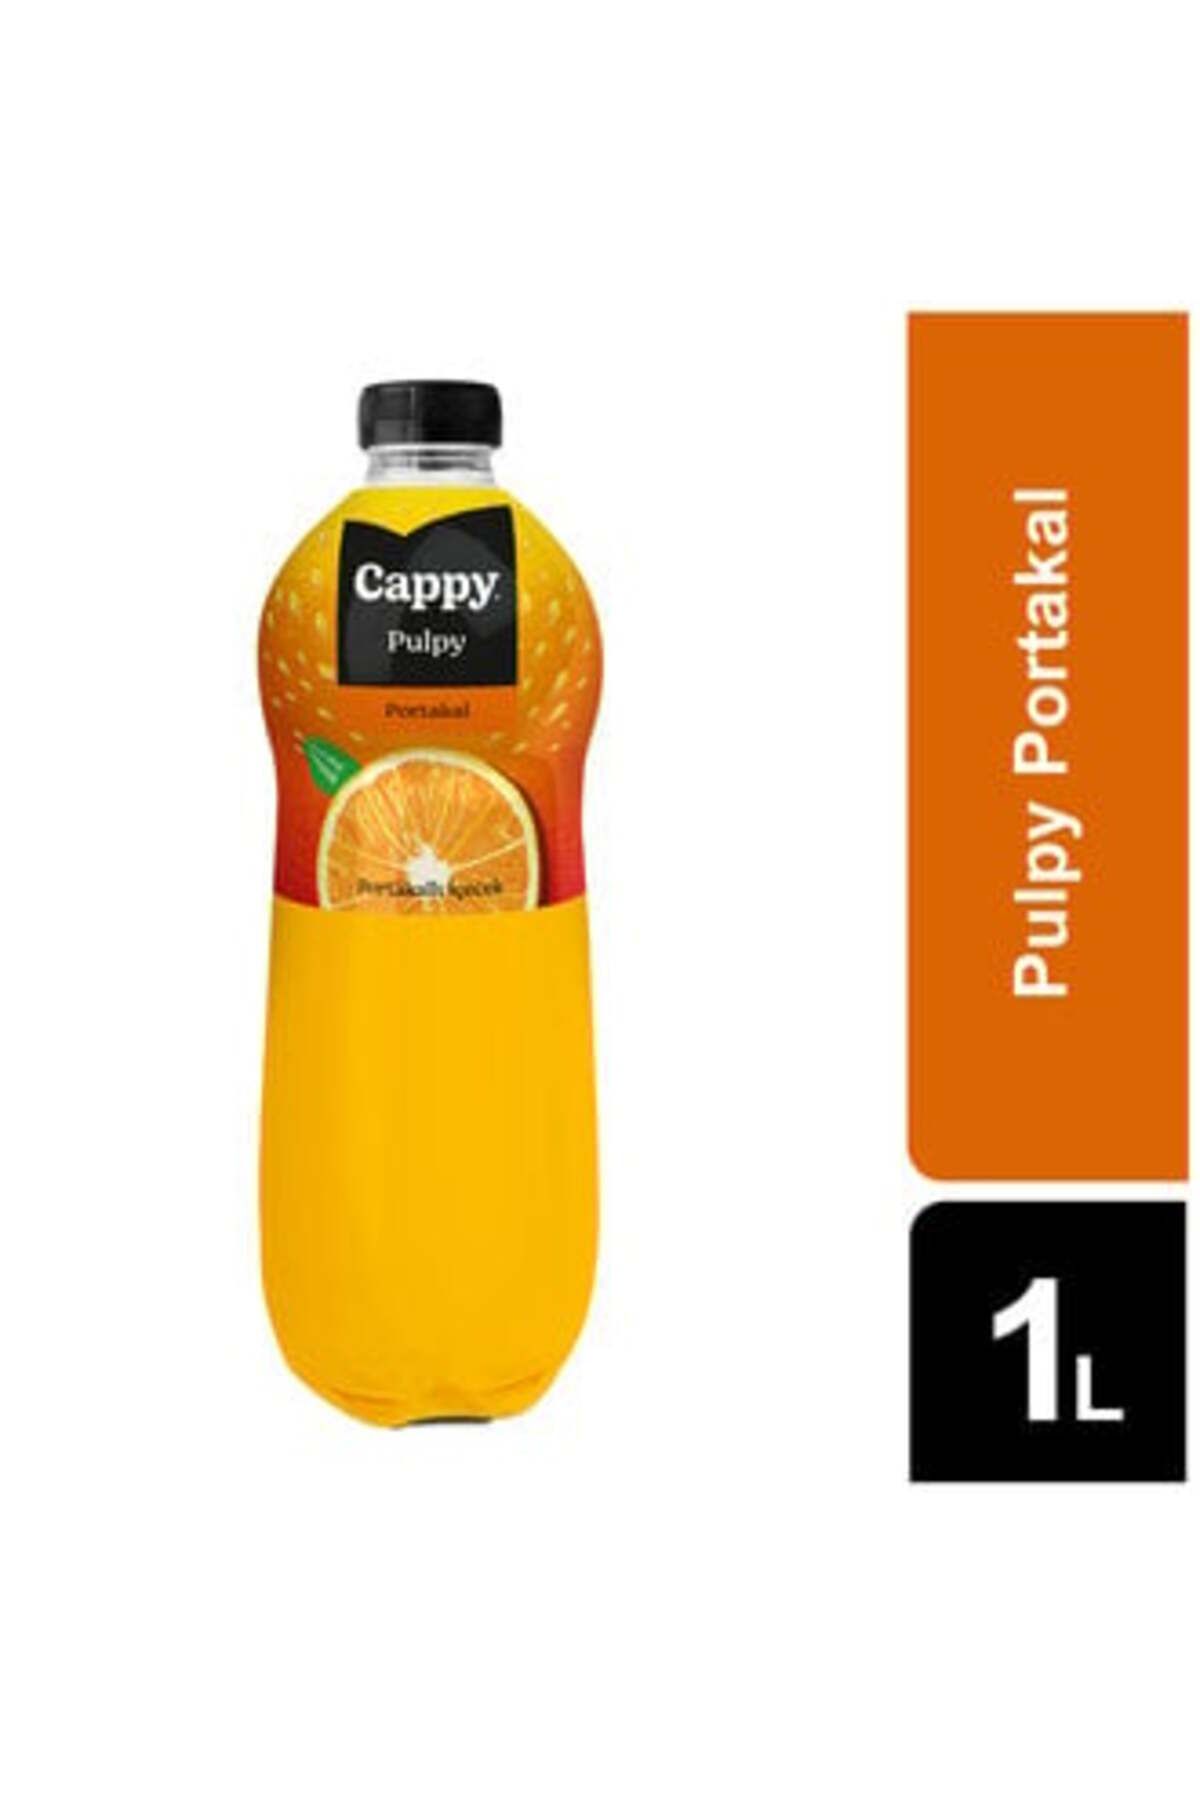 Cappy ( ETİ WANTED ) Cappy Pulpy Portakallı Meyve Suyu Pet 1 L ( 1 ADET )